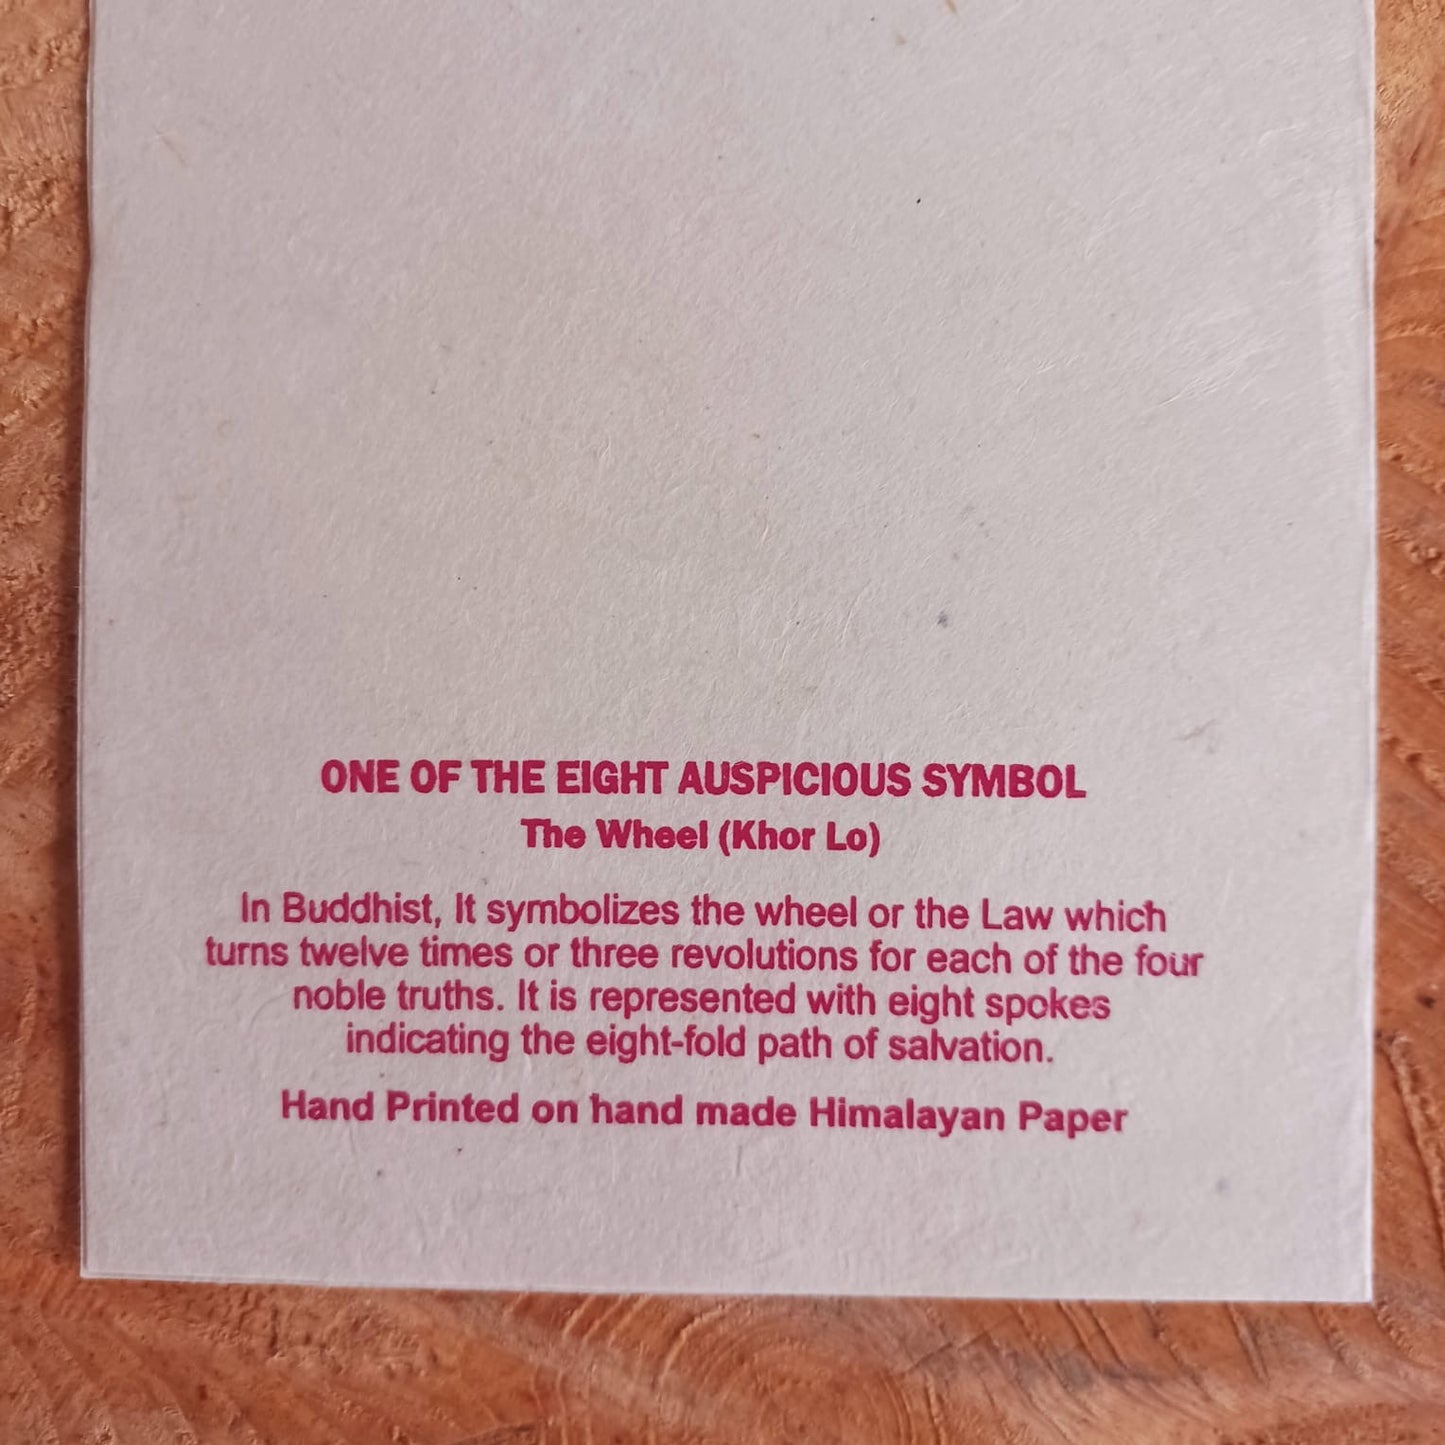 Lokta Paper Greetings Card | Dharma Wheel